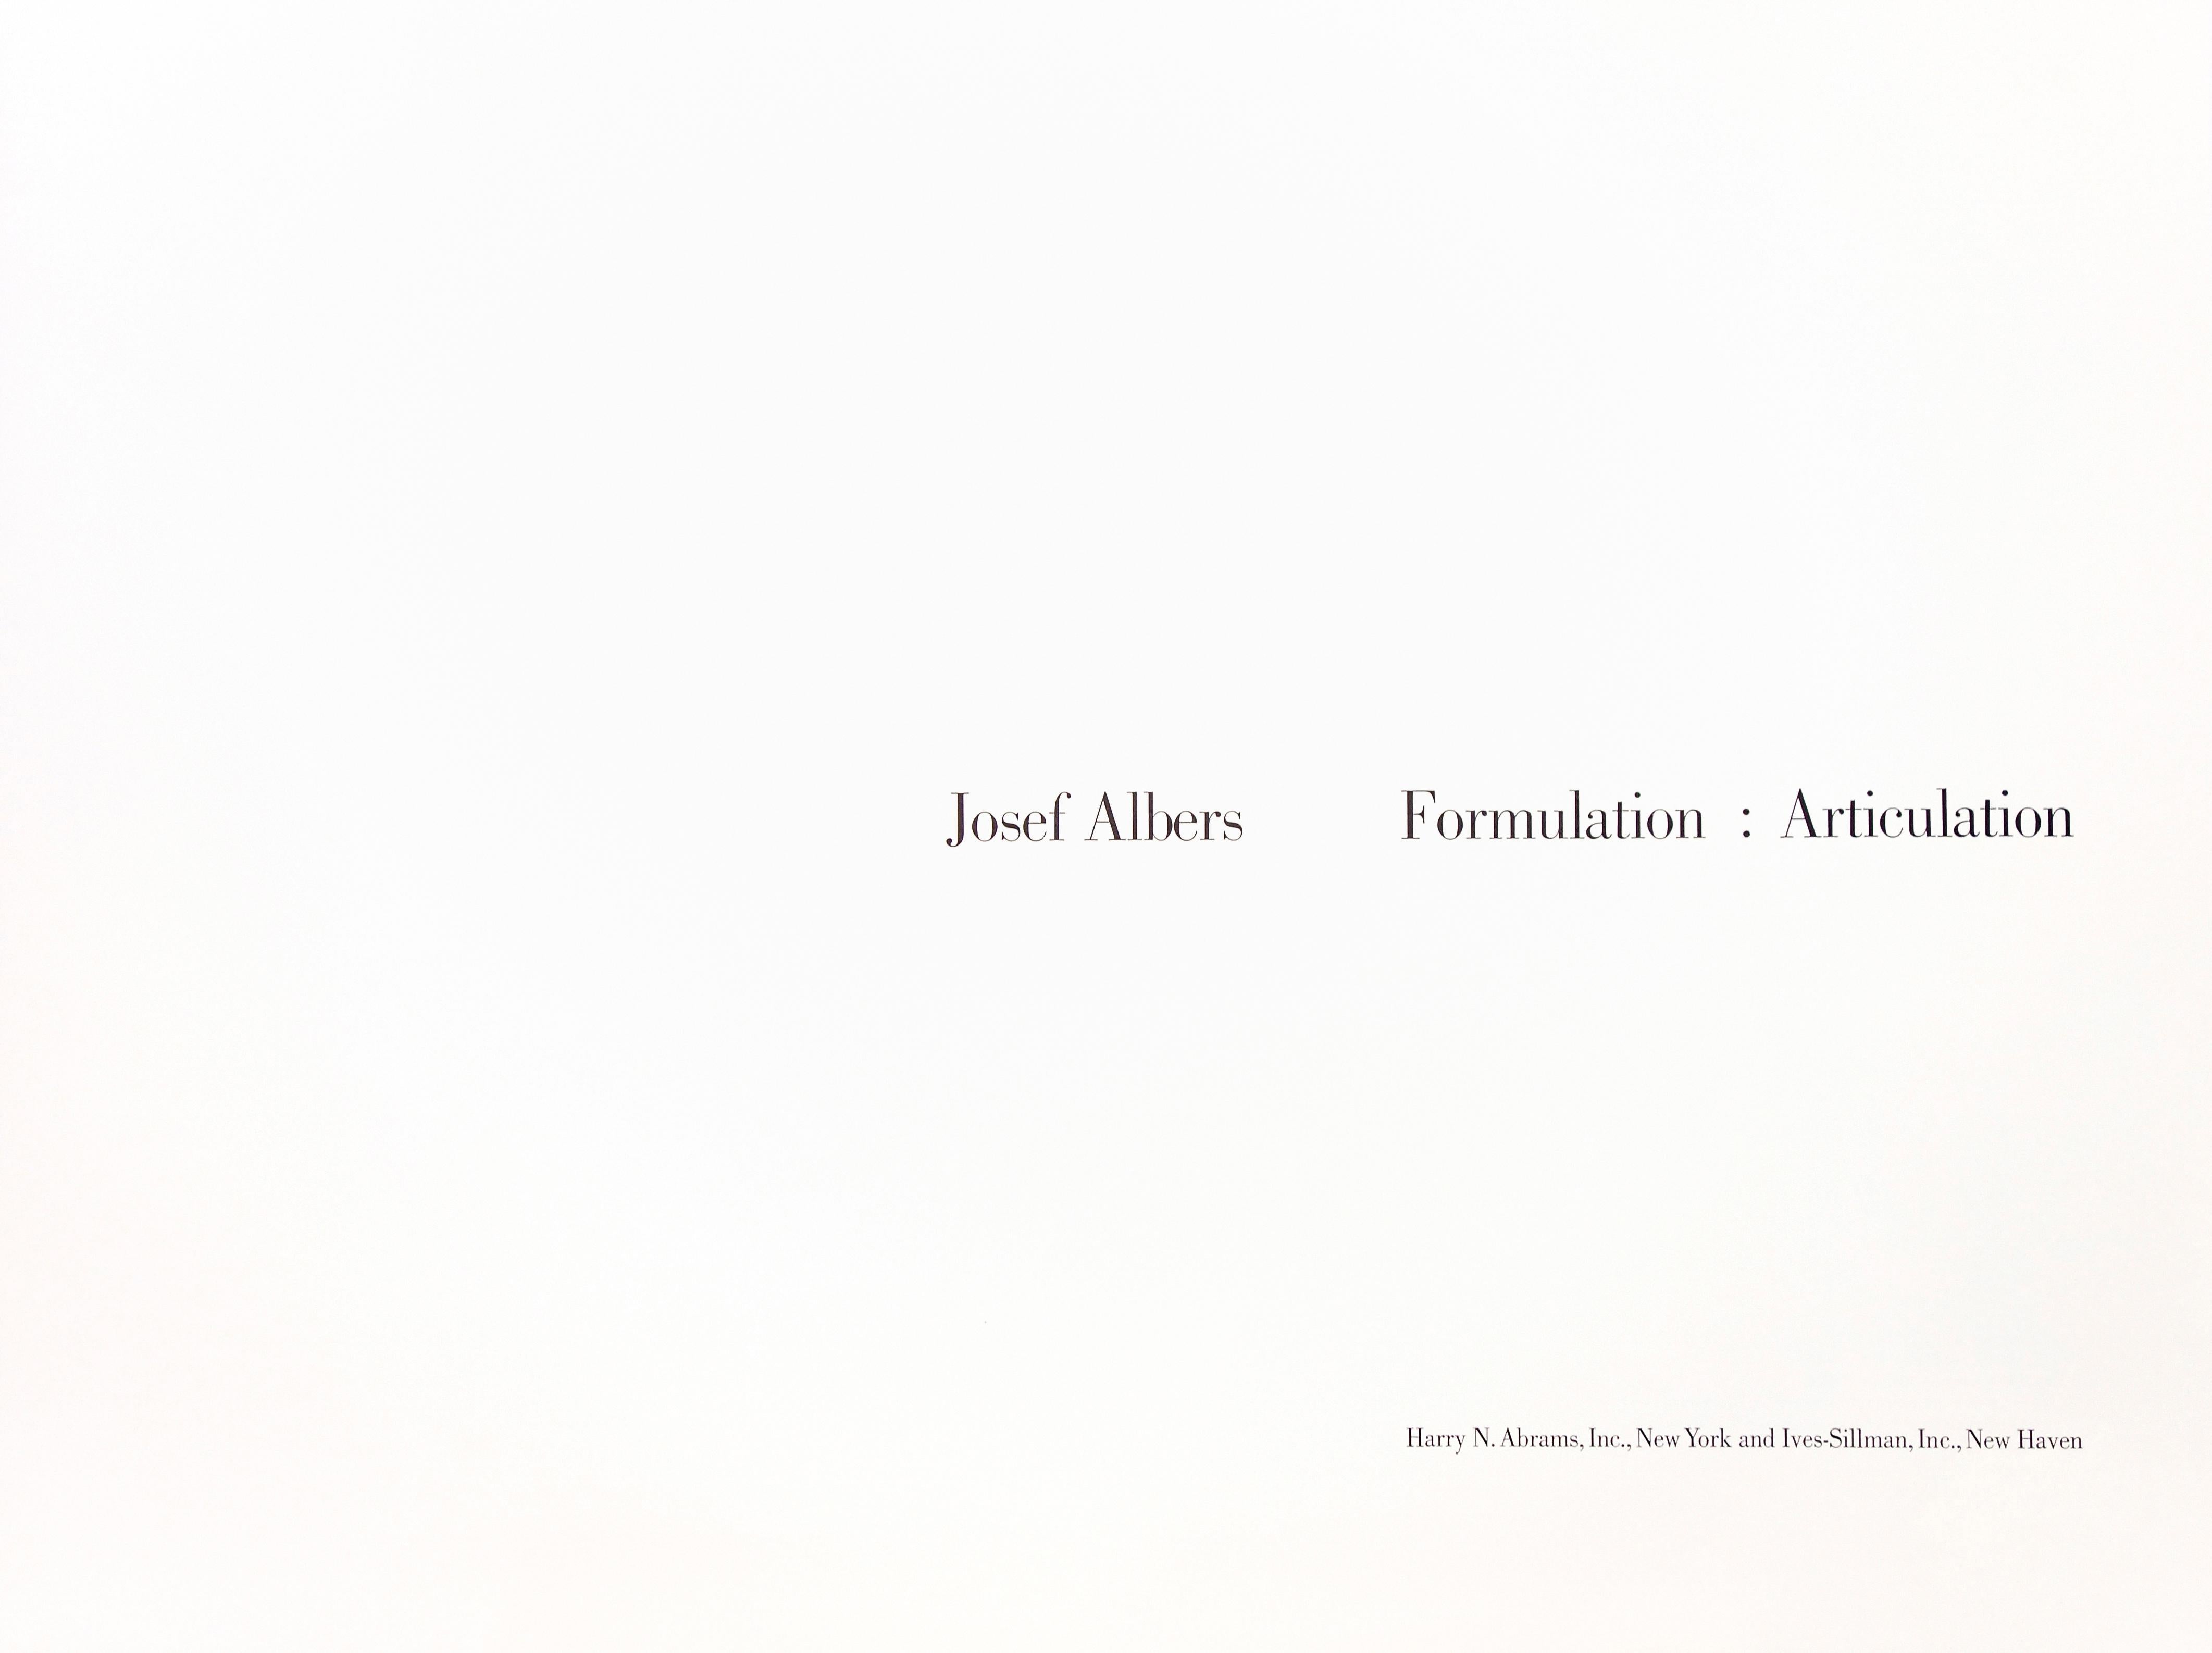 Formulation : Articulation, Portfolio II Folder 1 (B) - Abstract Print by Josef Albers